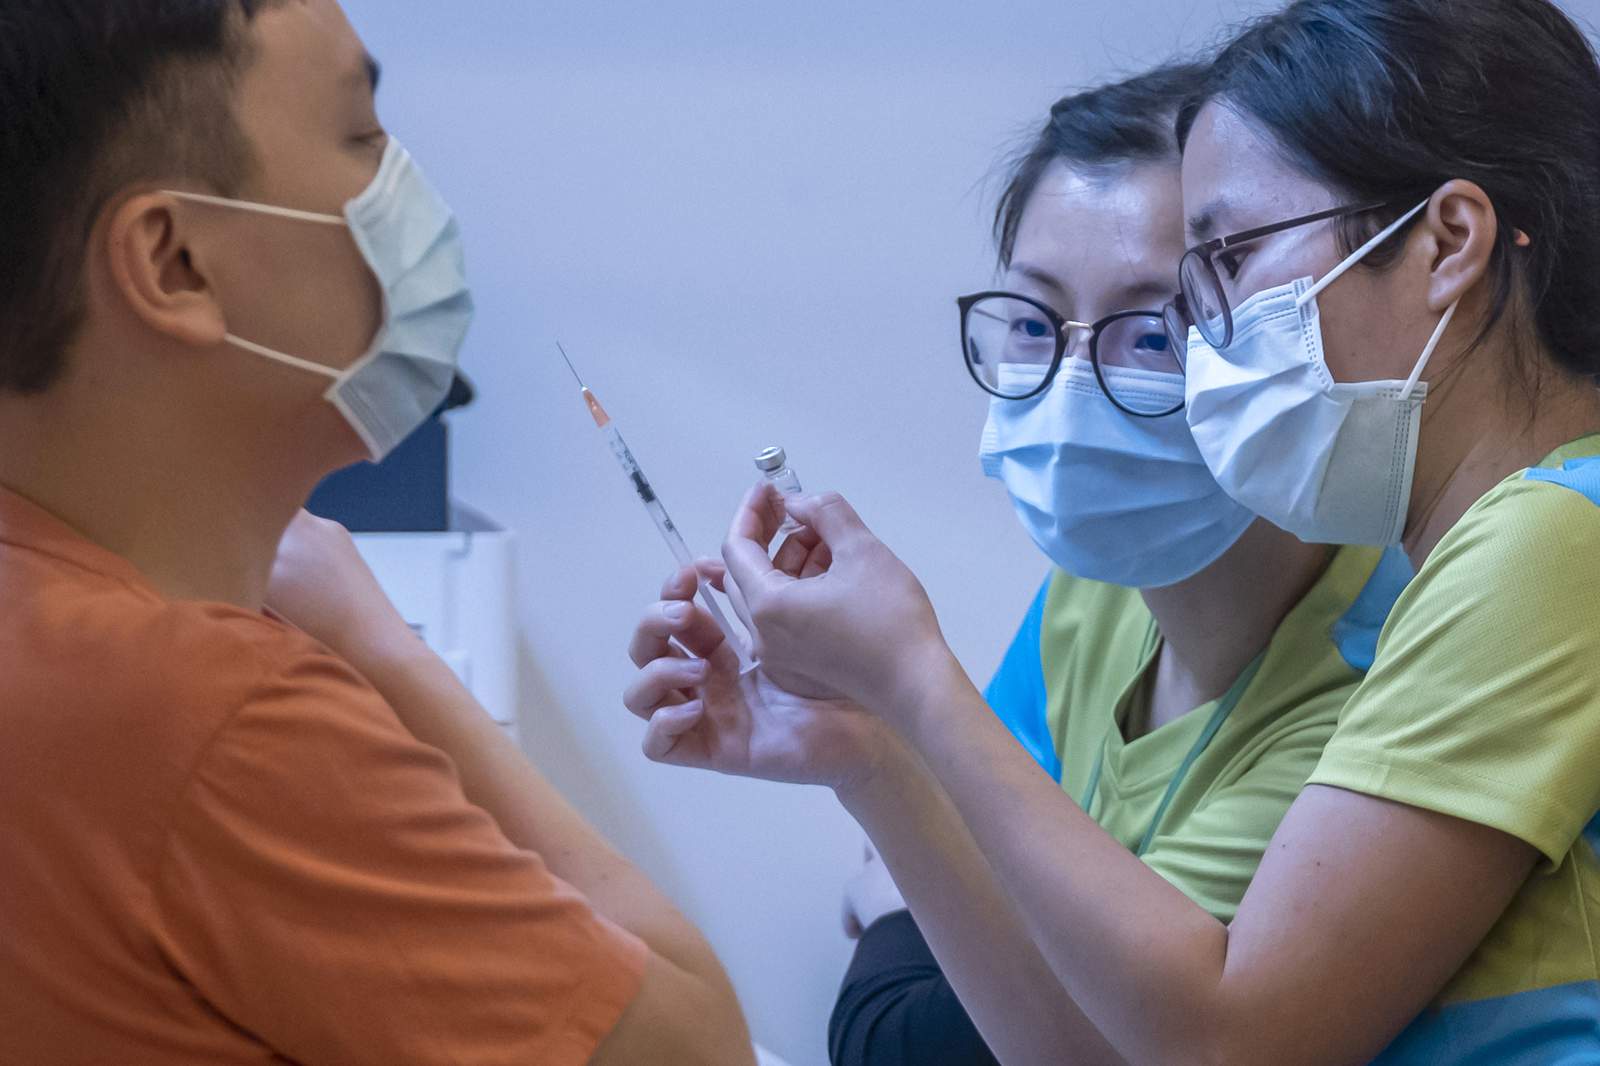 Hong Kong vaccination drive struggles to gain public trust